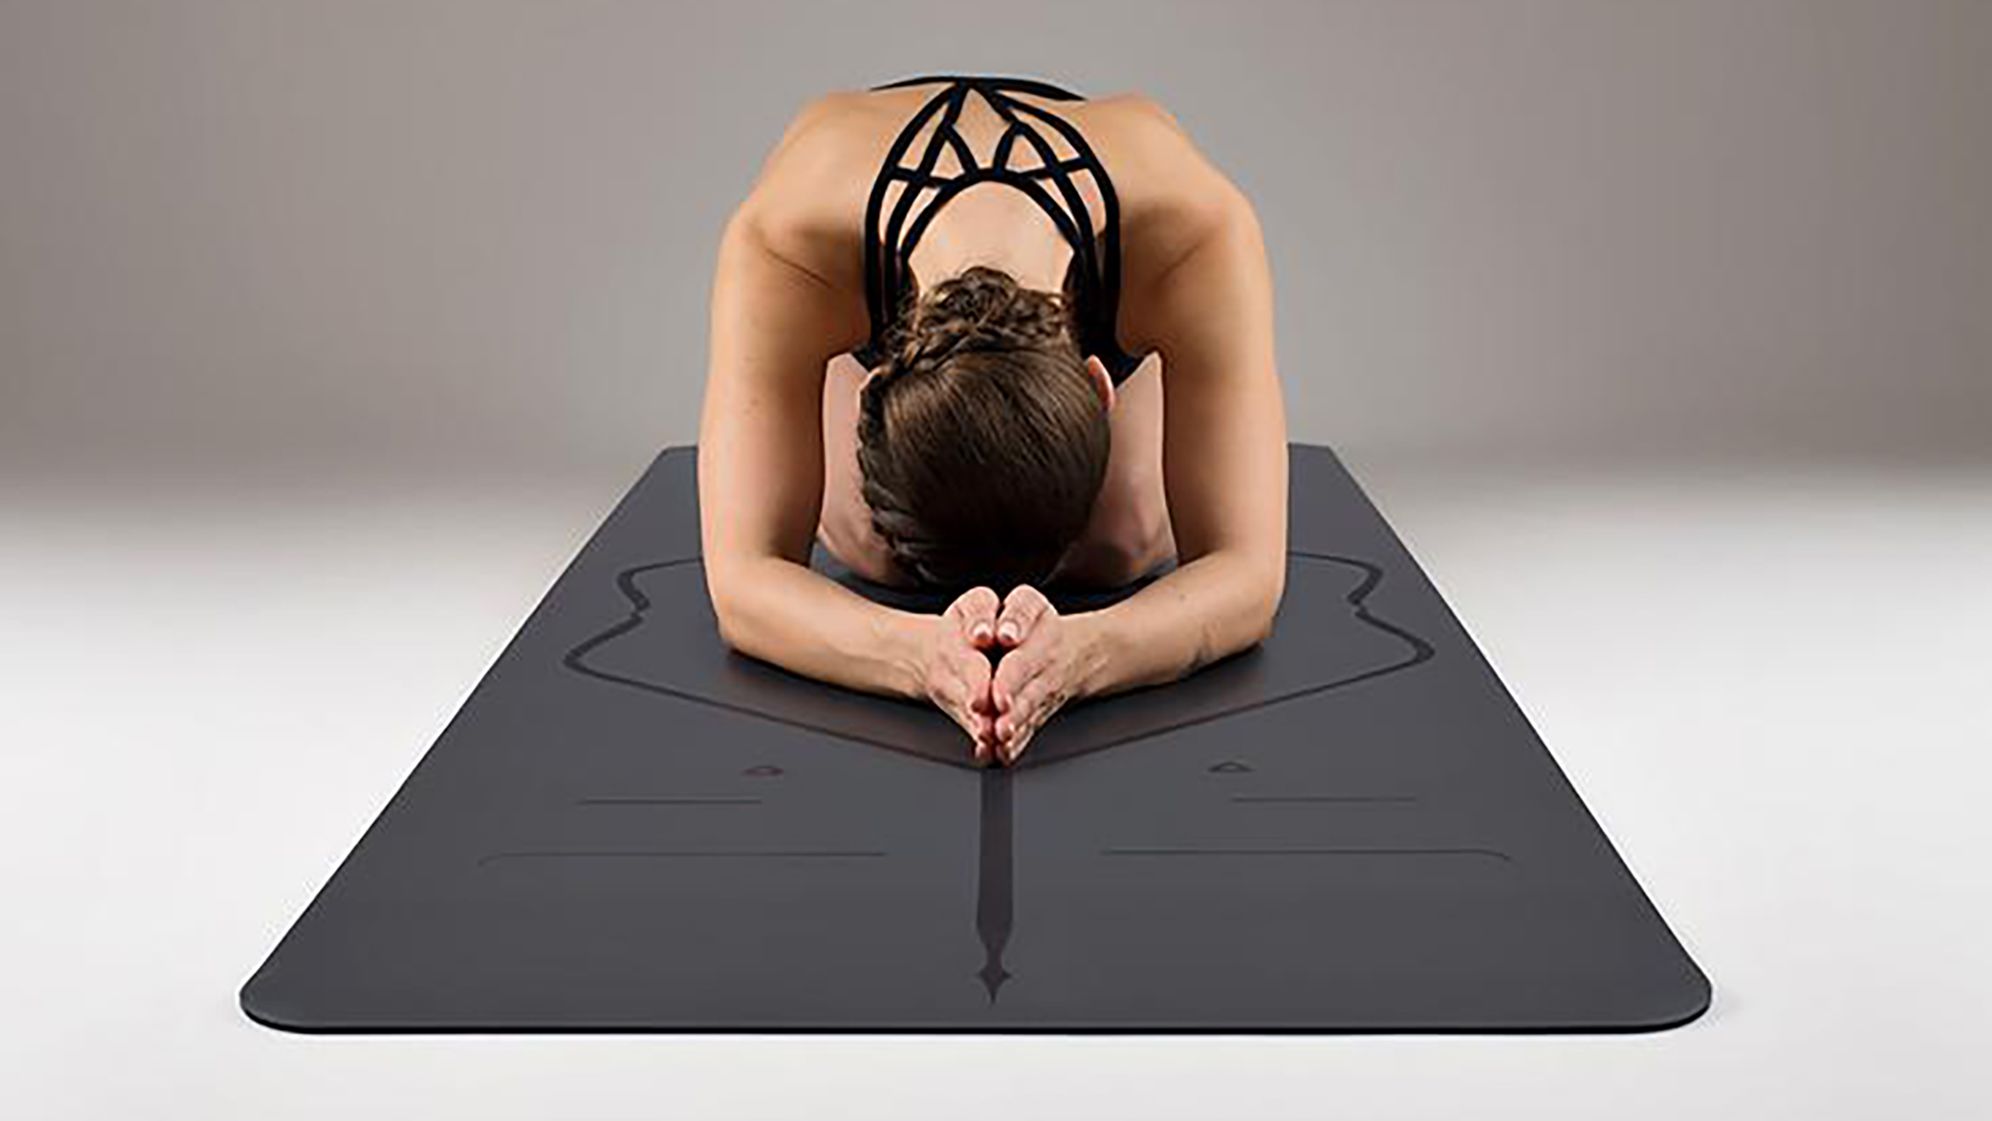 GRIP ANTI SLIP YOGA MATS - Welcome to Grip yoga